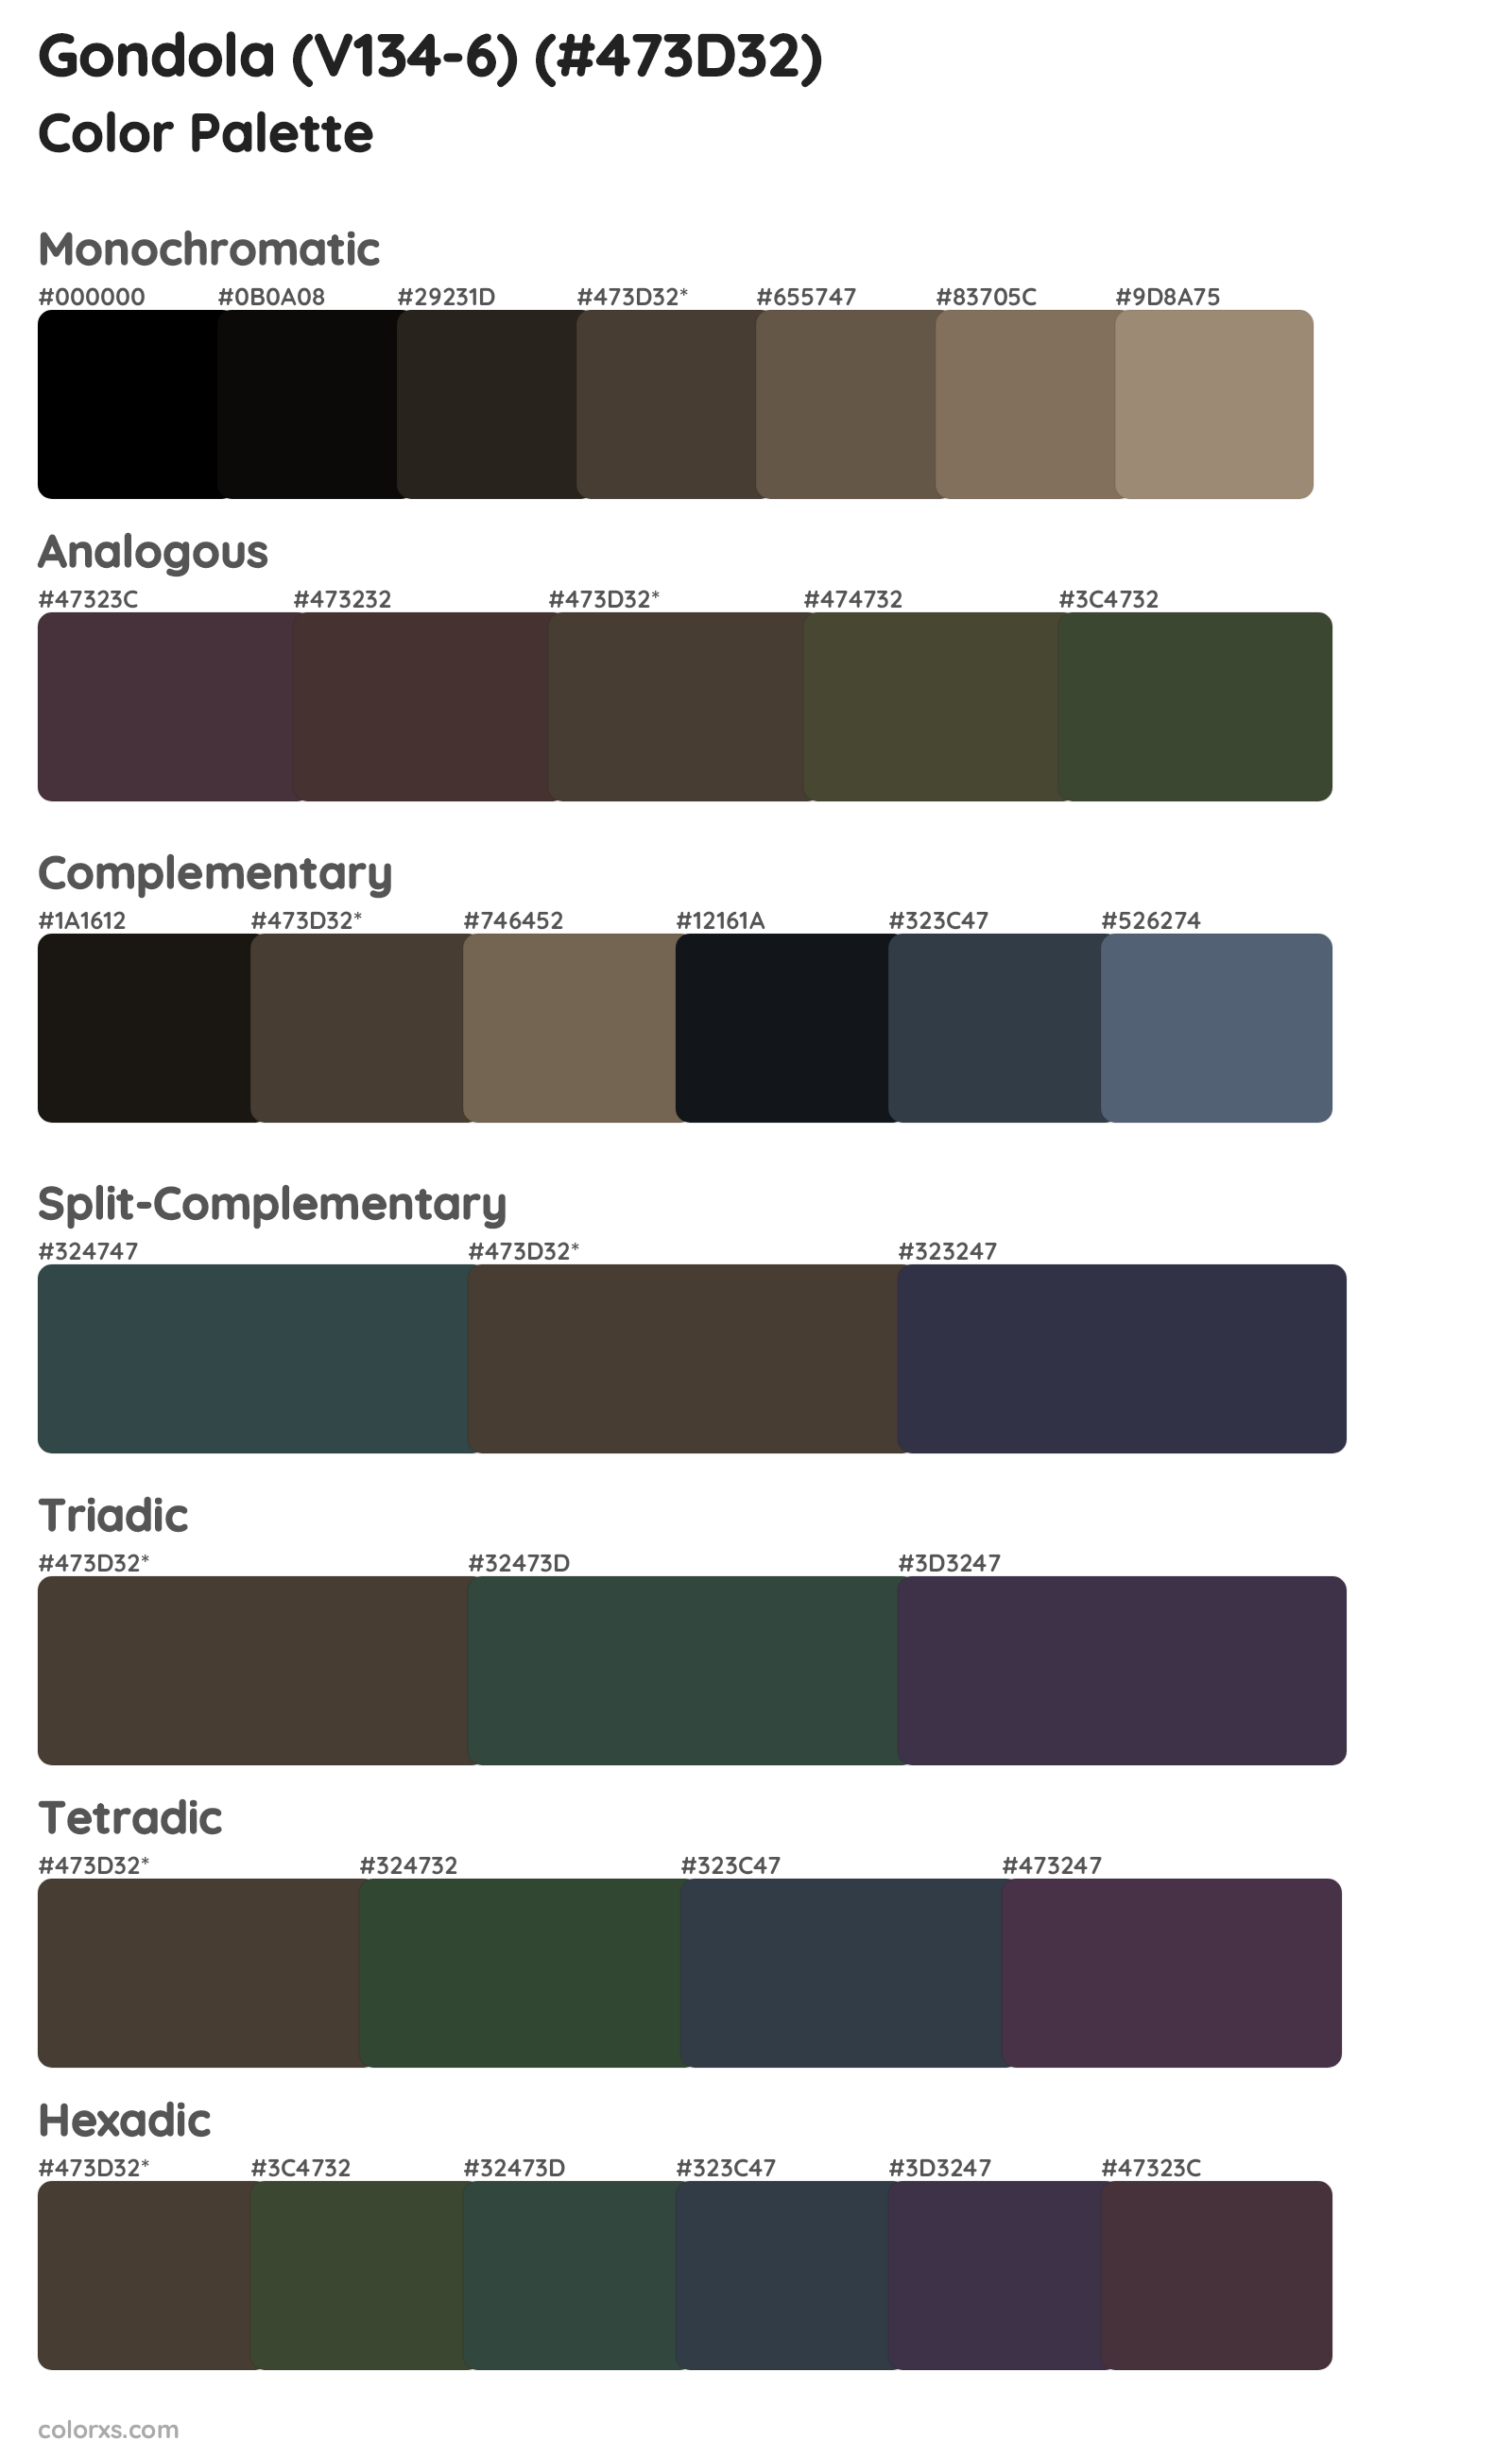 Gondola (V134-6) Color Scheme Palettes